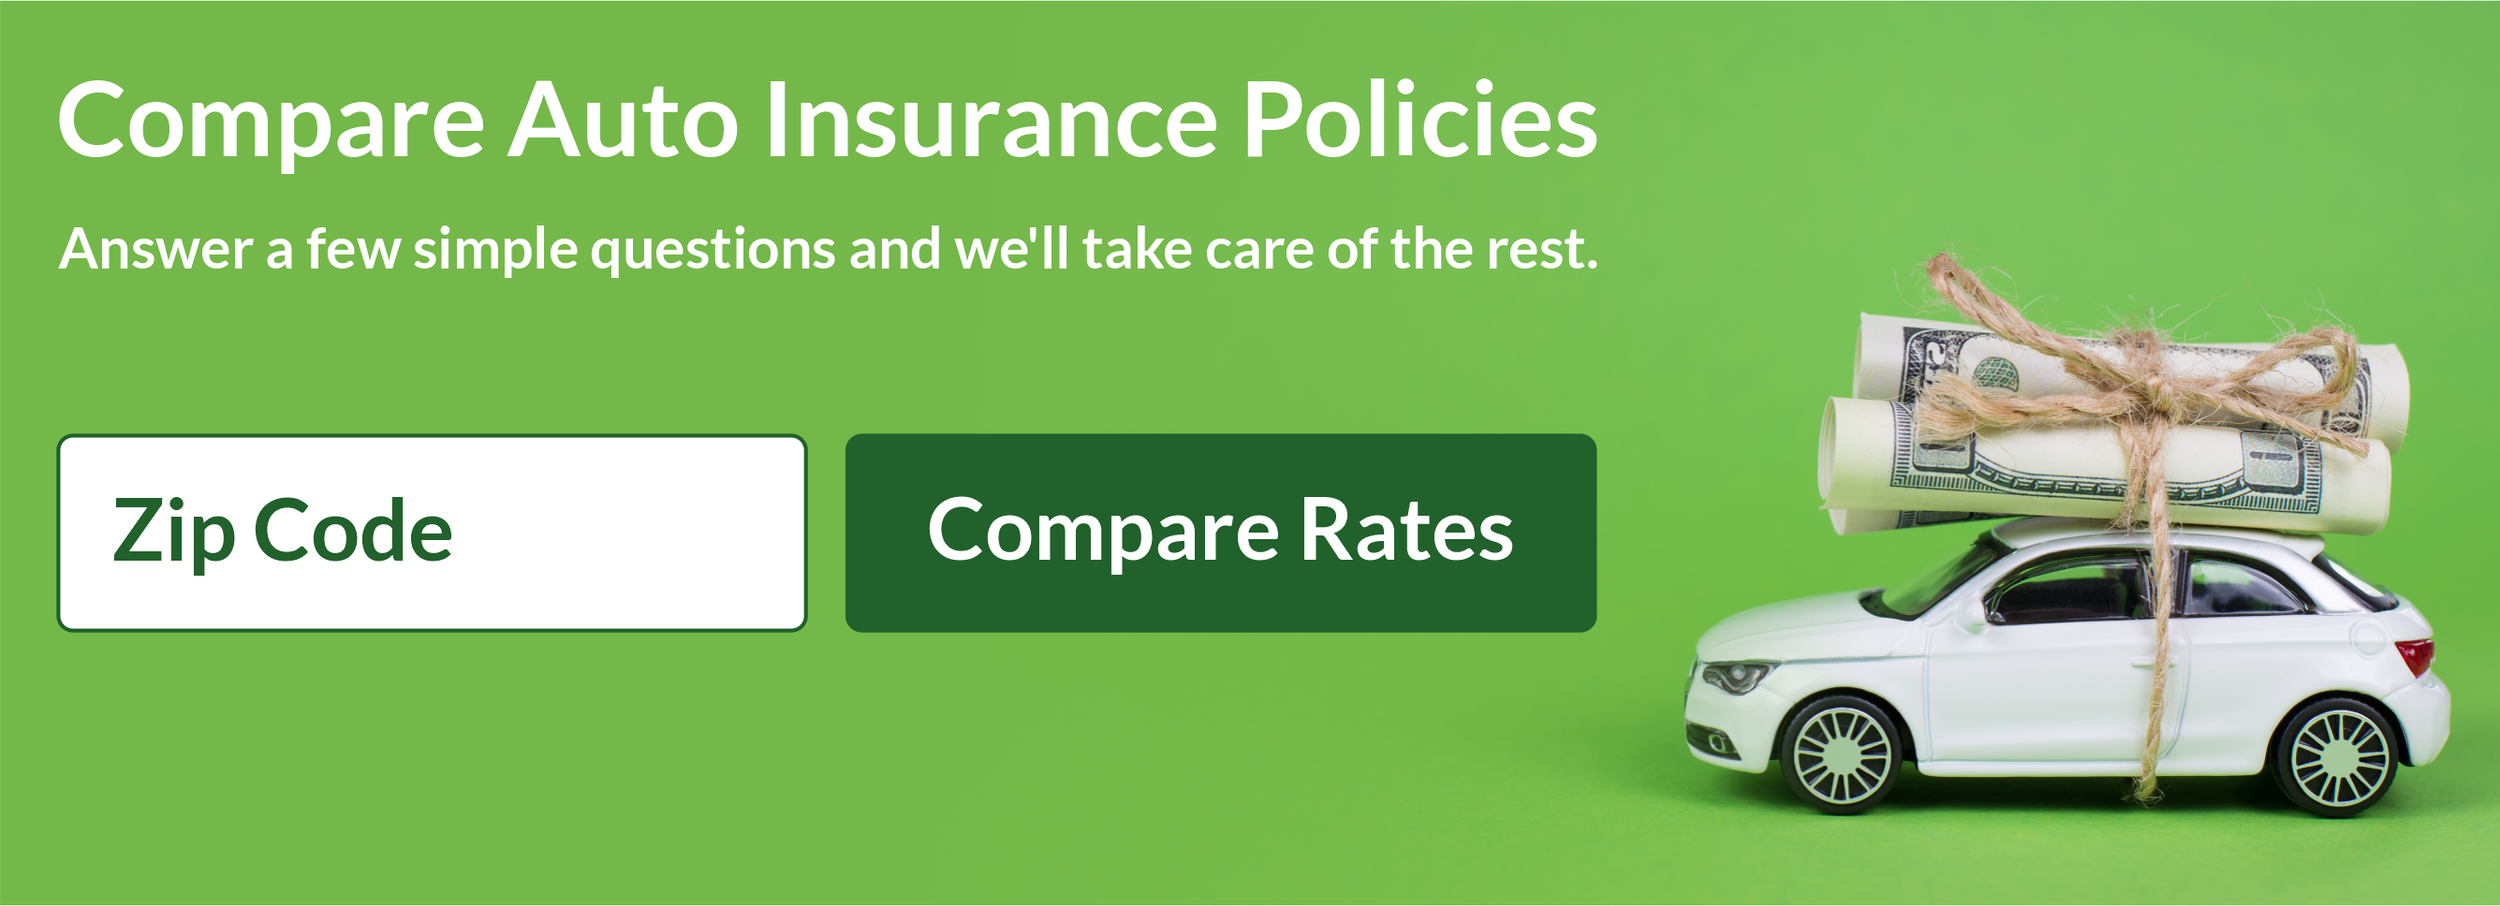 MW - Compare Auto Insurance PoliciesV1.png